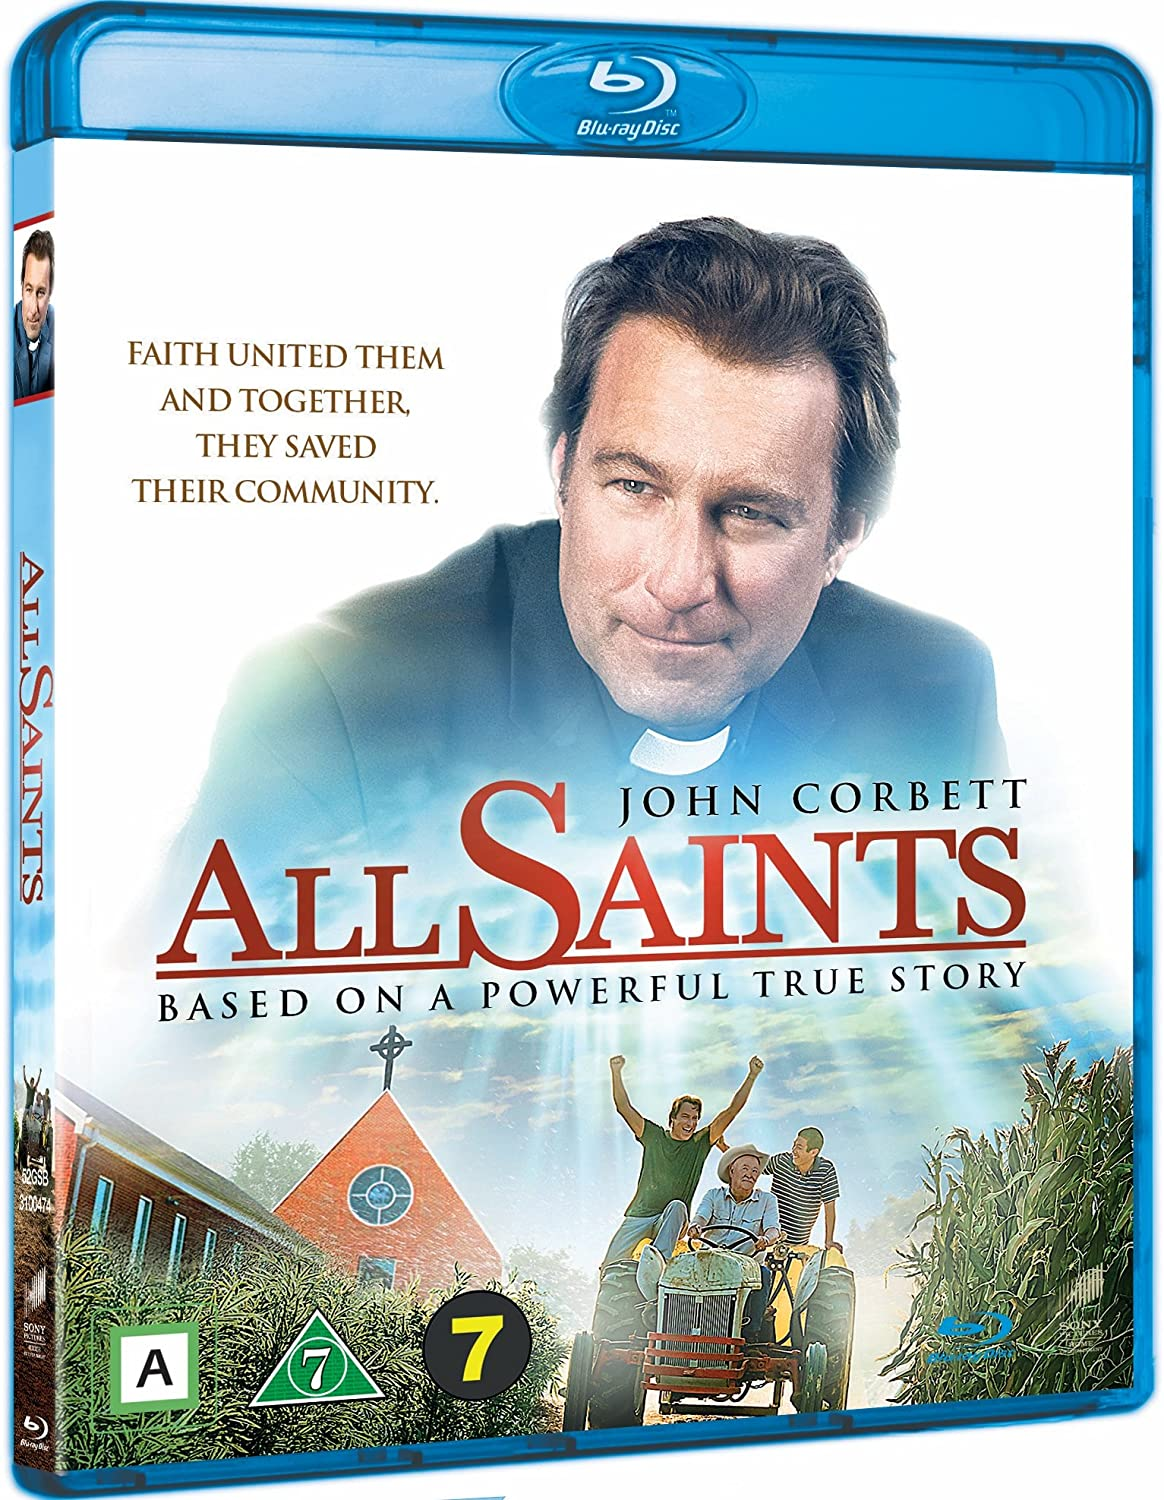 All Saints (Blu-ray)